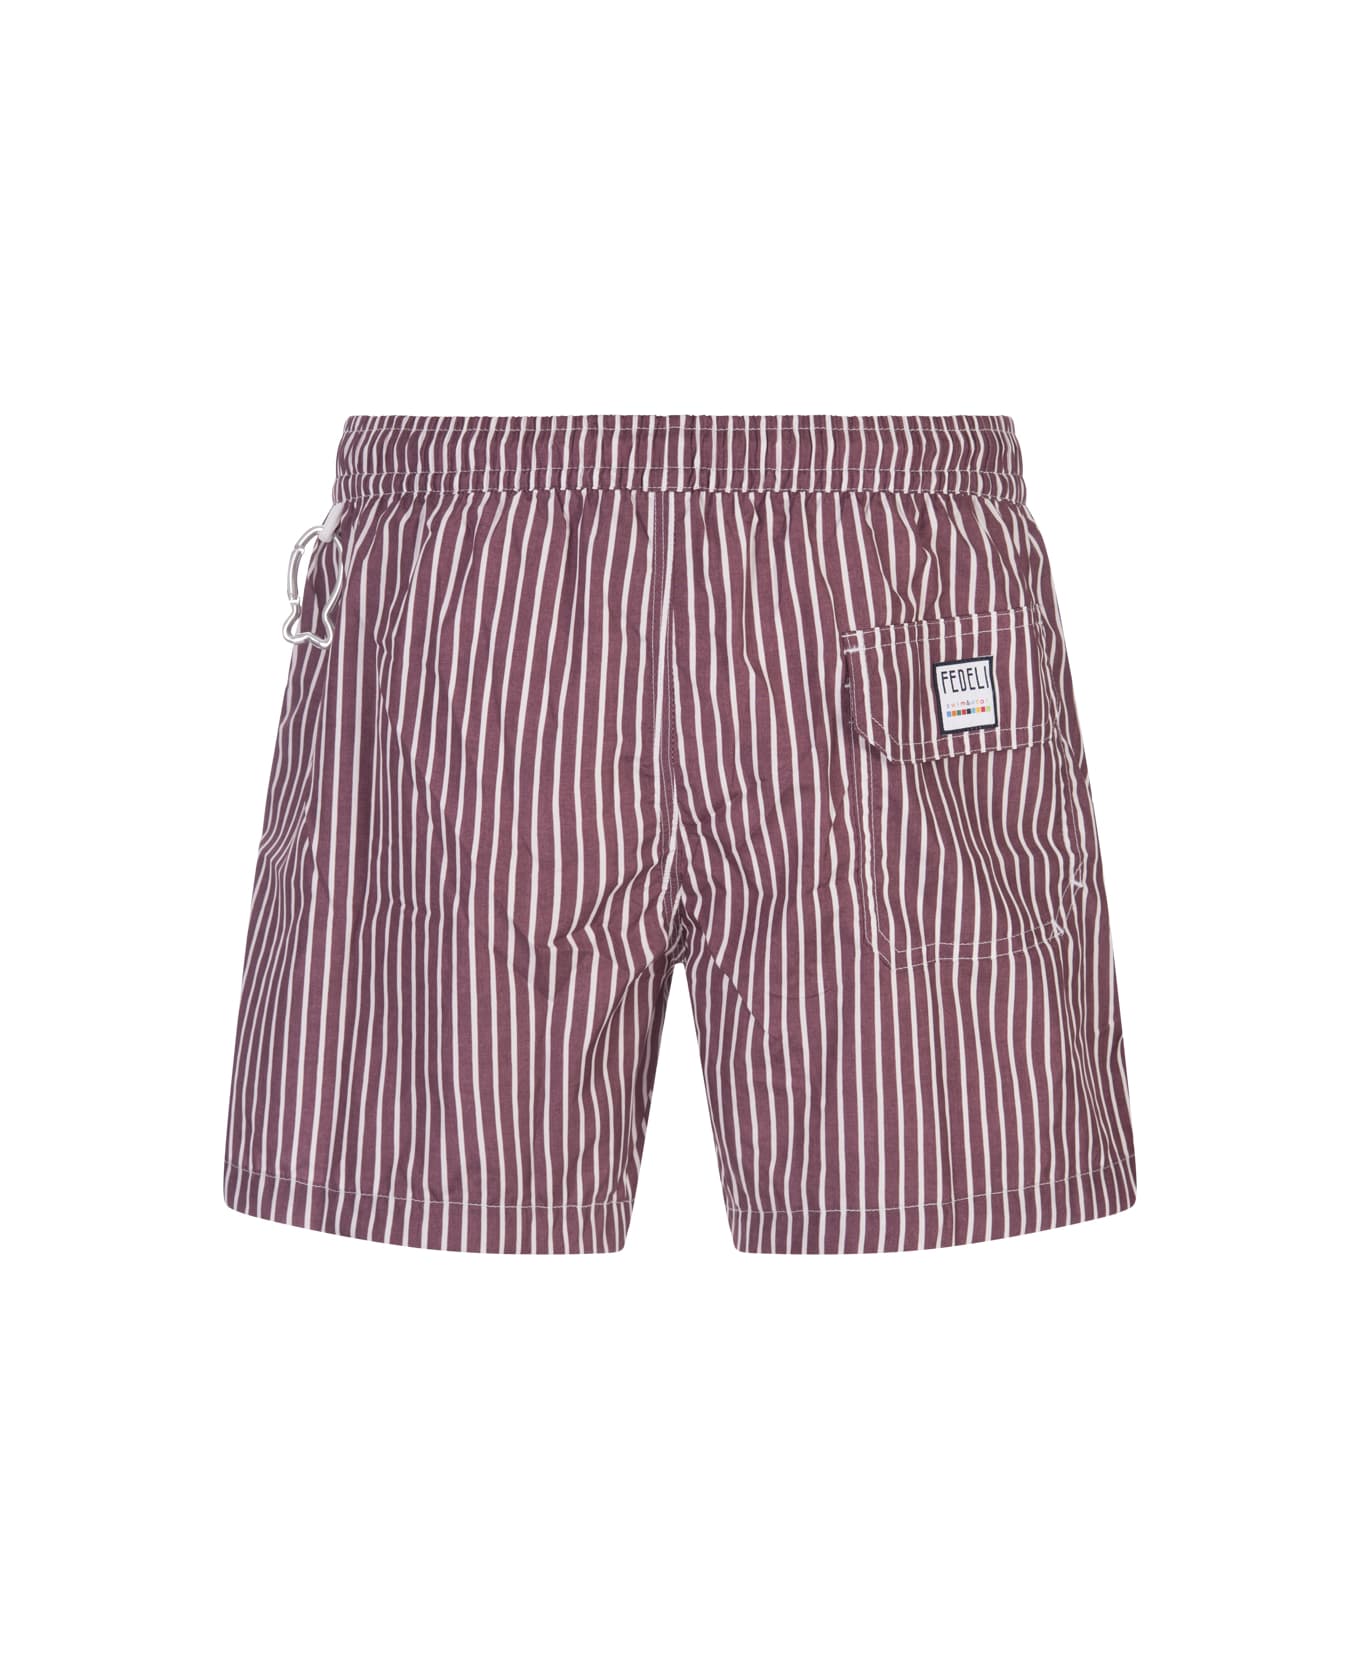 Fedeli Burgundy And White Striped Swim Shorts - Red